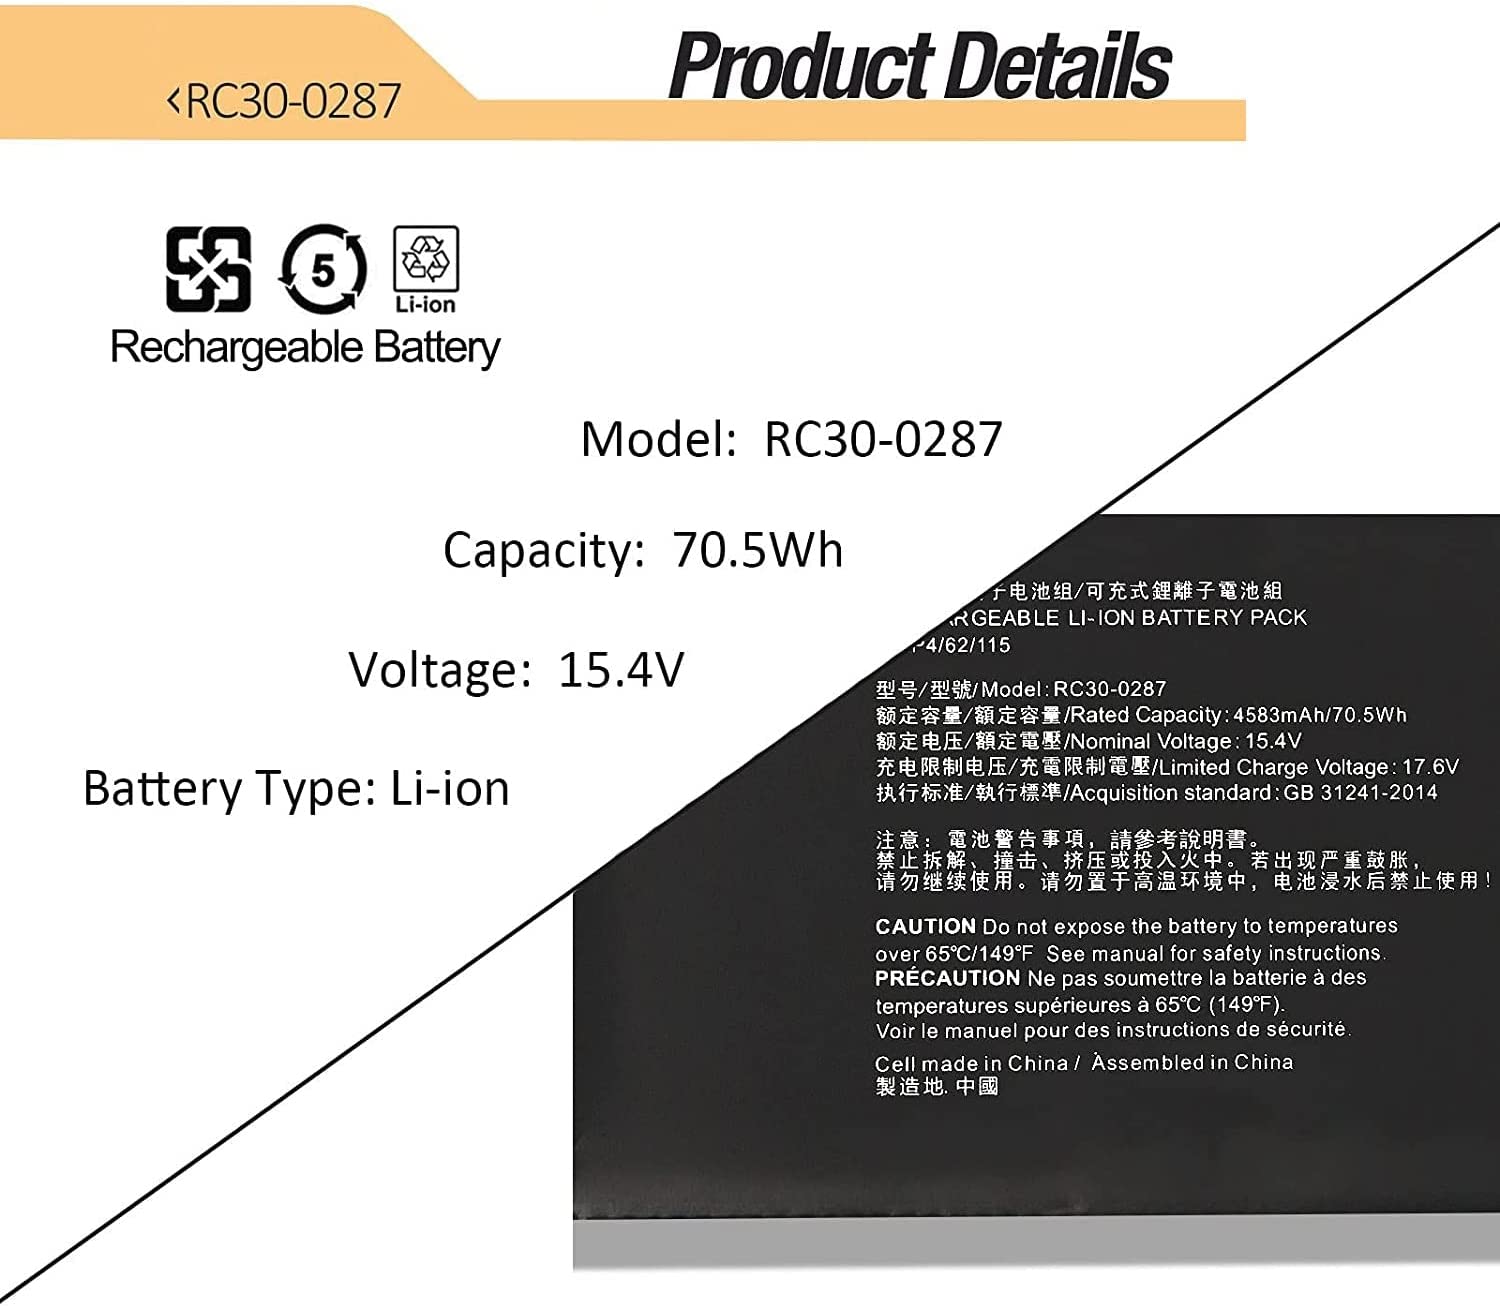 Generic laptop battery For RC30-0287 Razer Blade Pro 17 2019 2020 RZ09-0287 / 15.4V 4583mAh